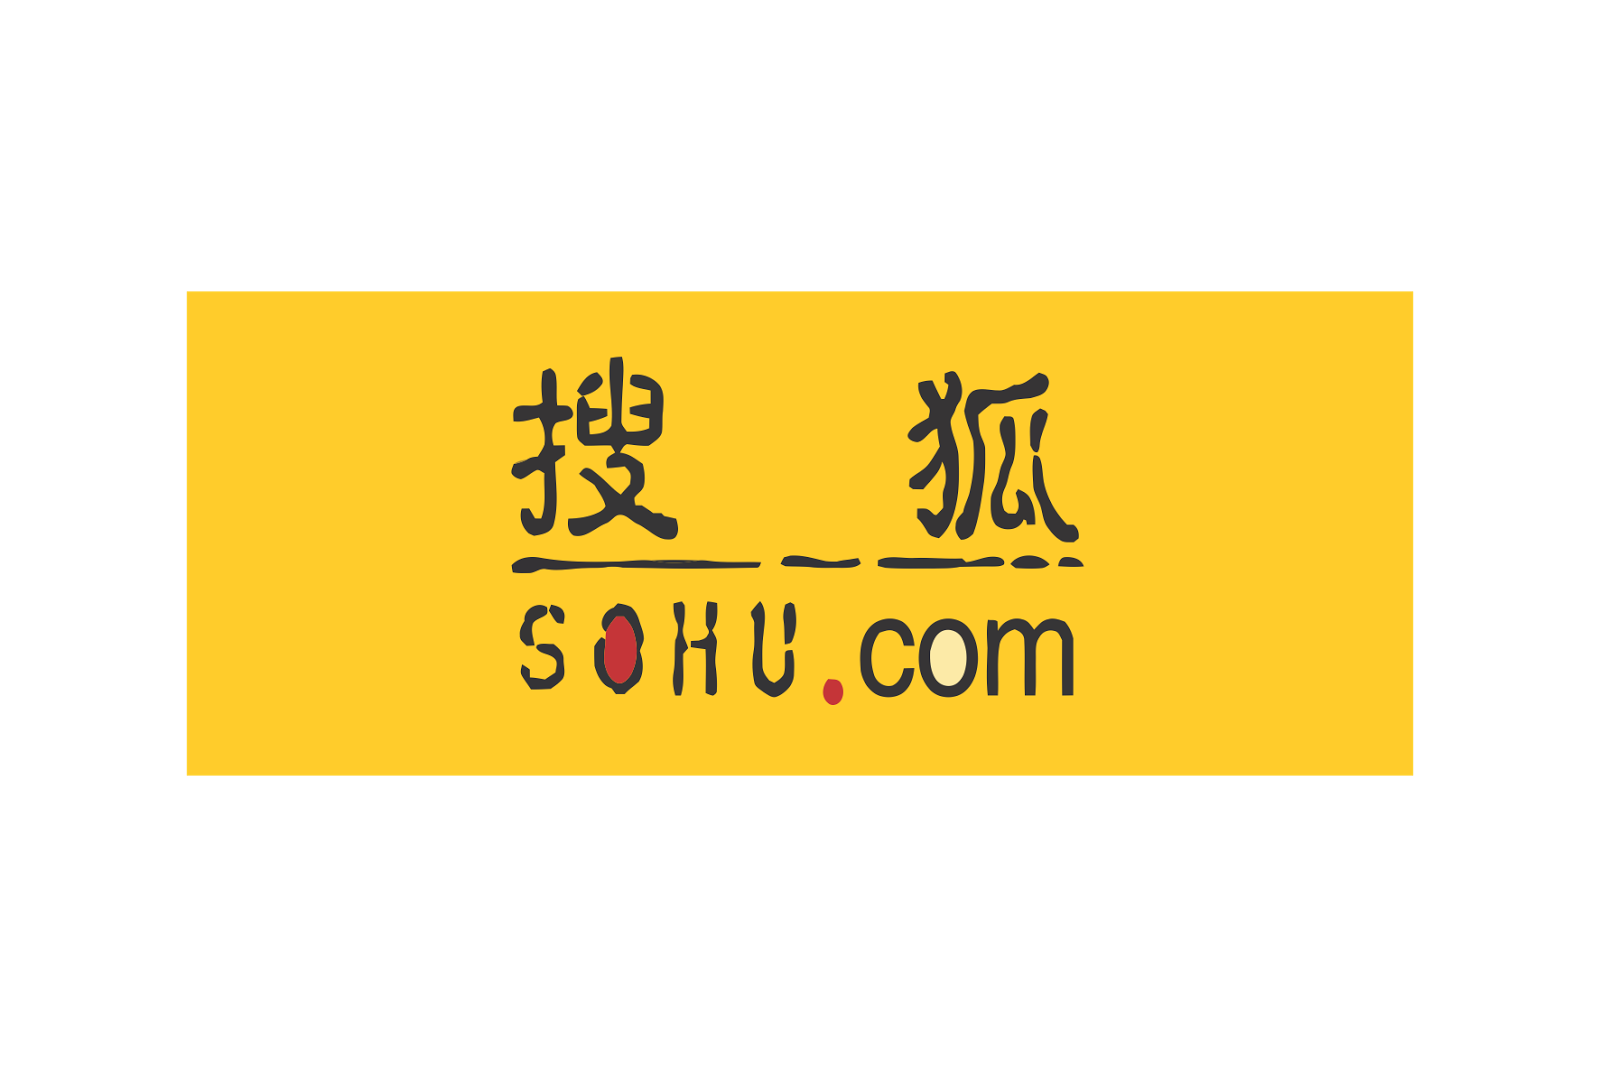 Sohu pluspng.com Inc. (Sohu) 